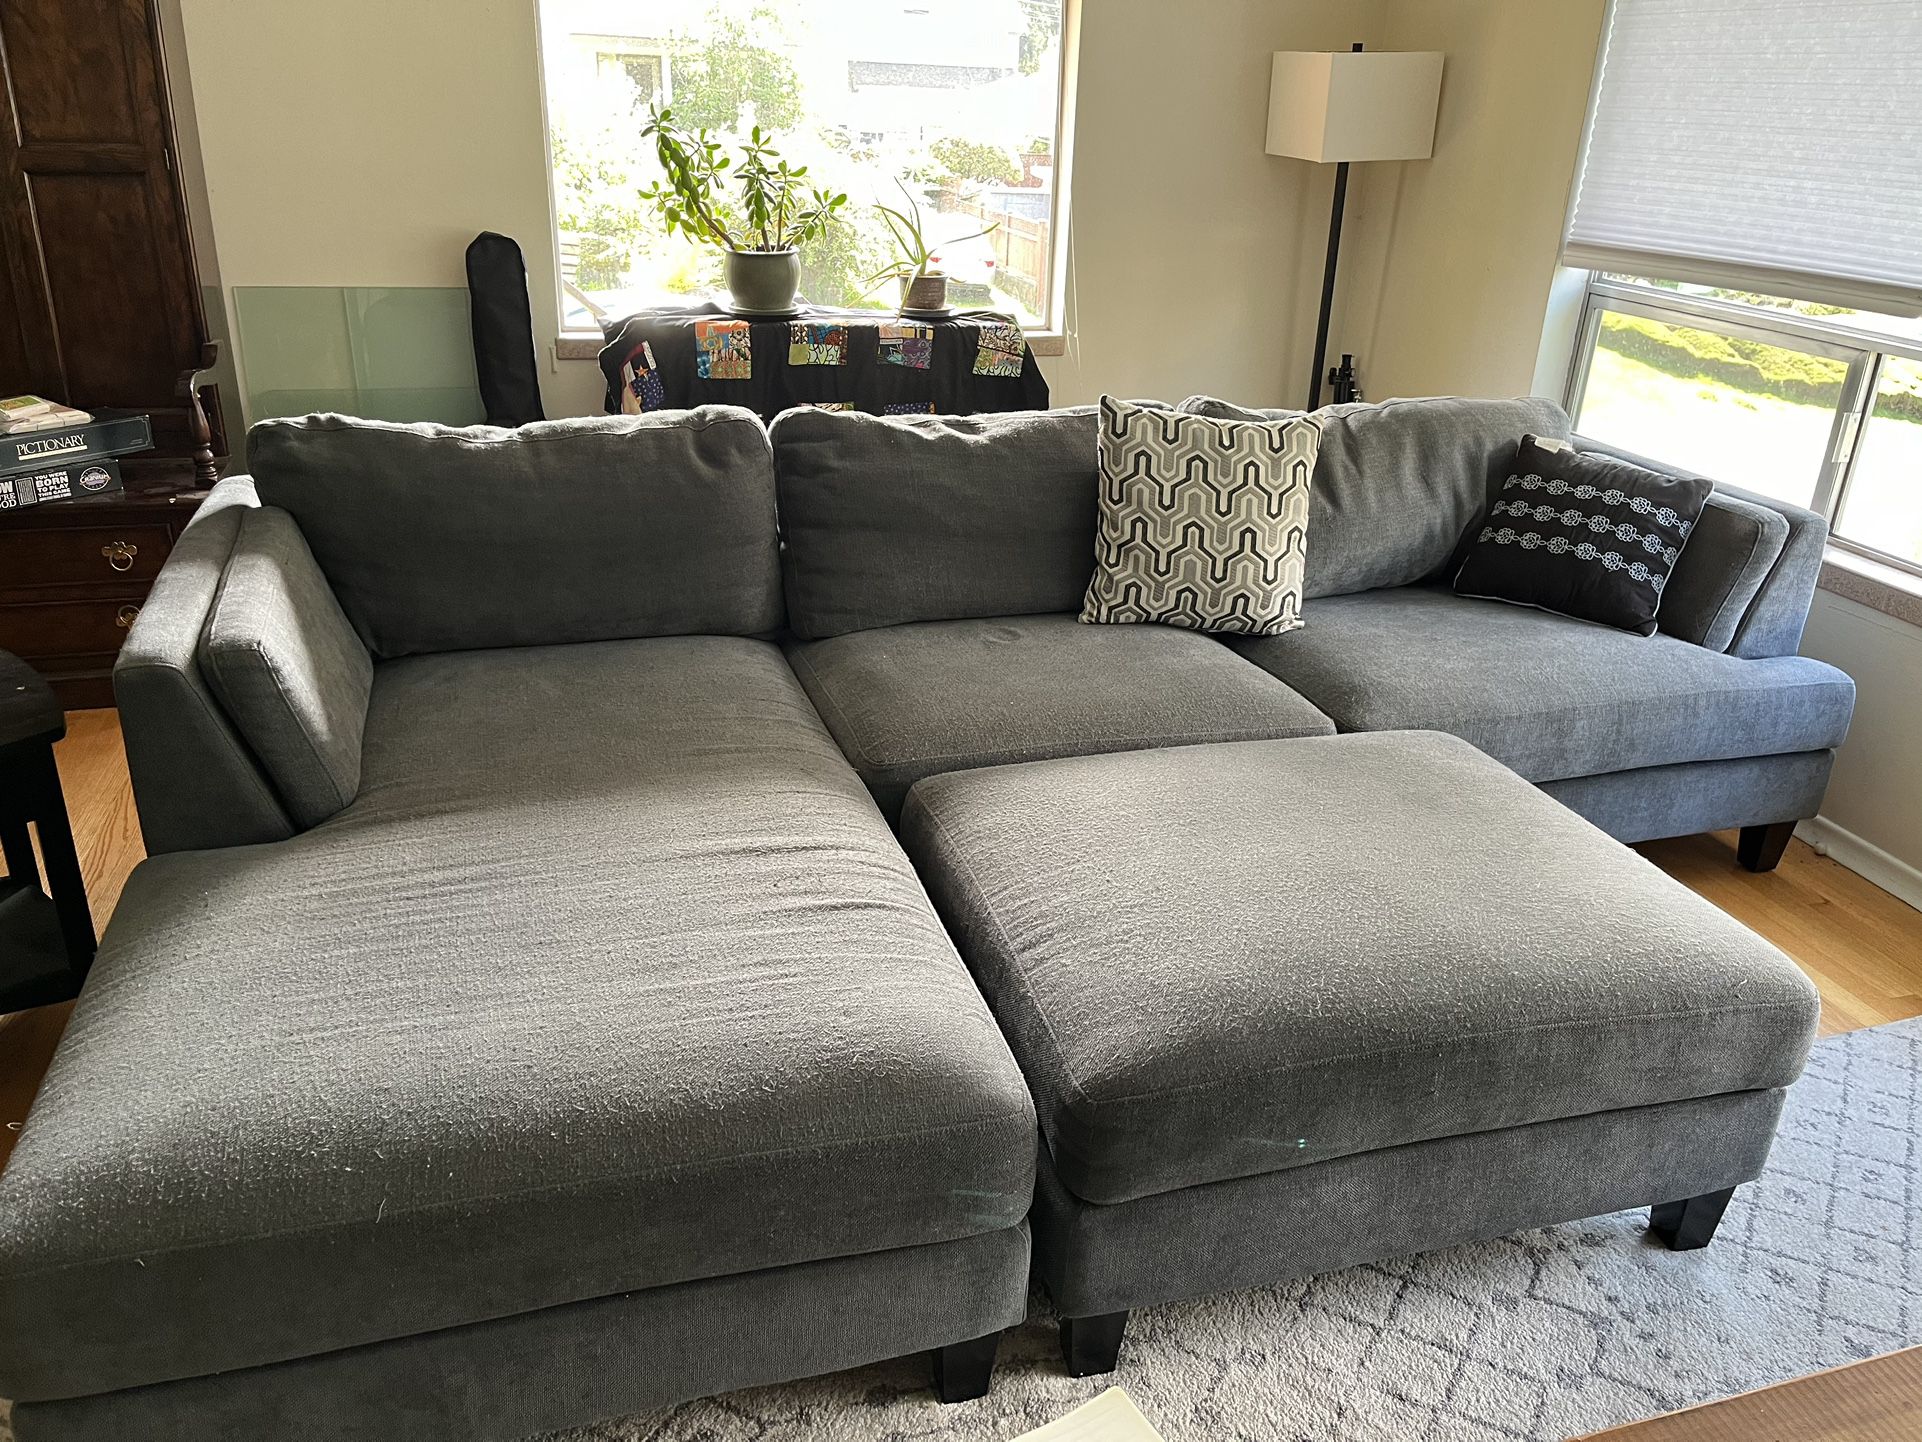 Very Comfortable Blue-gray Sofa 